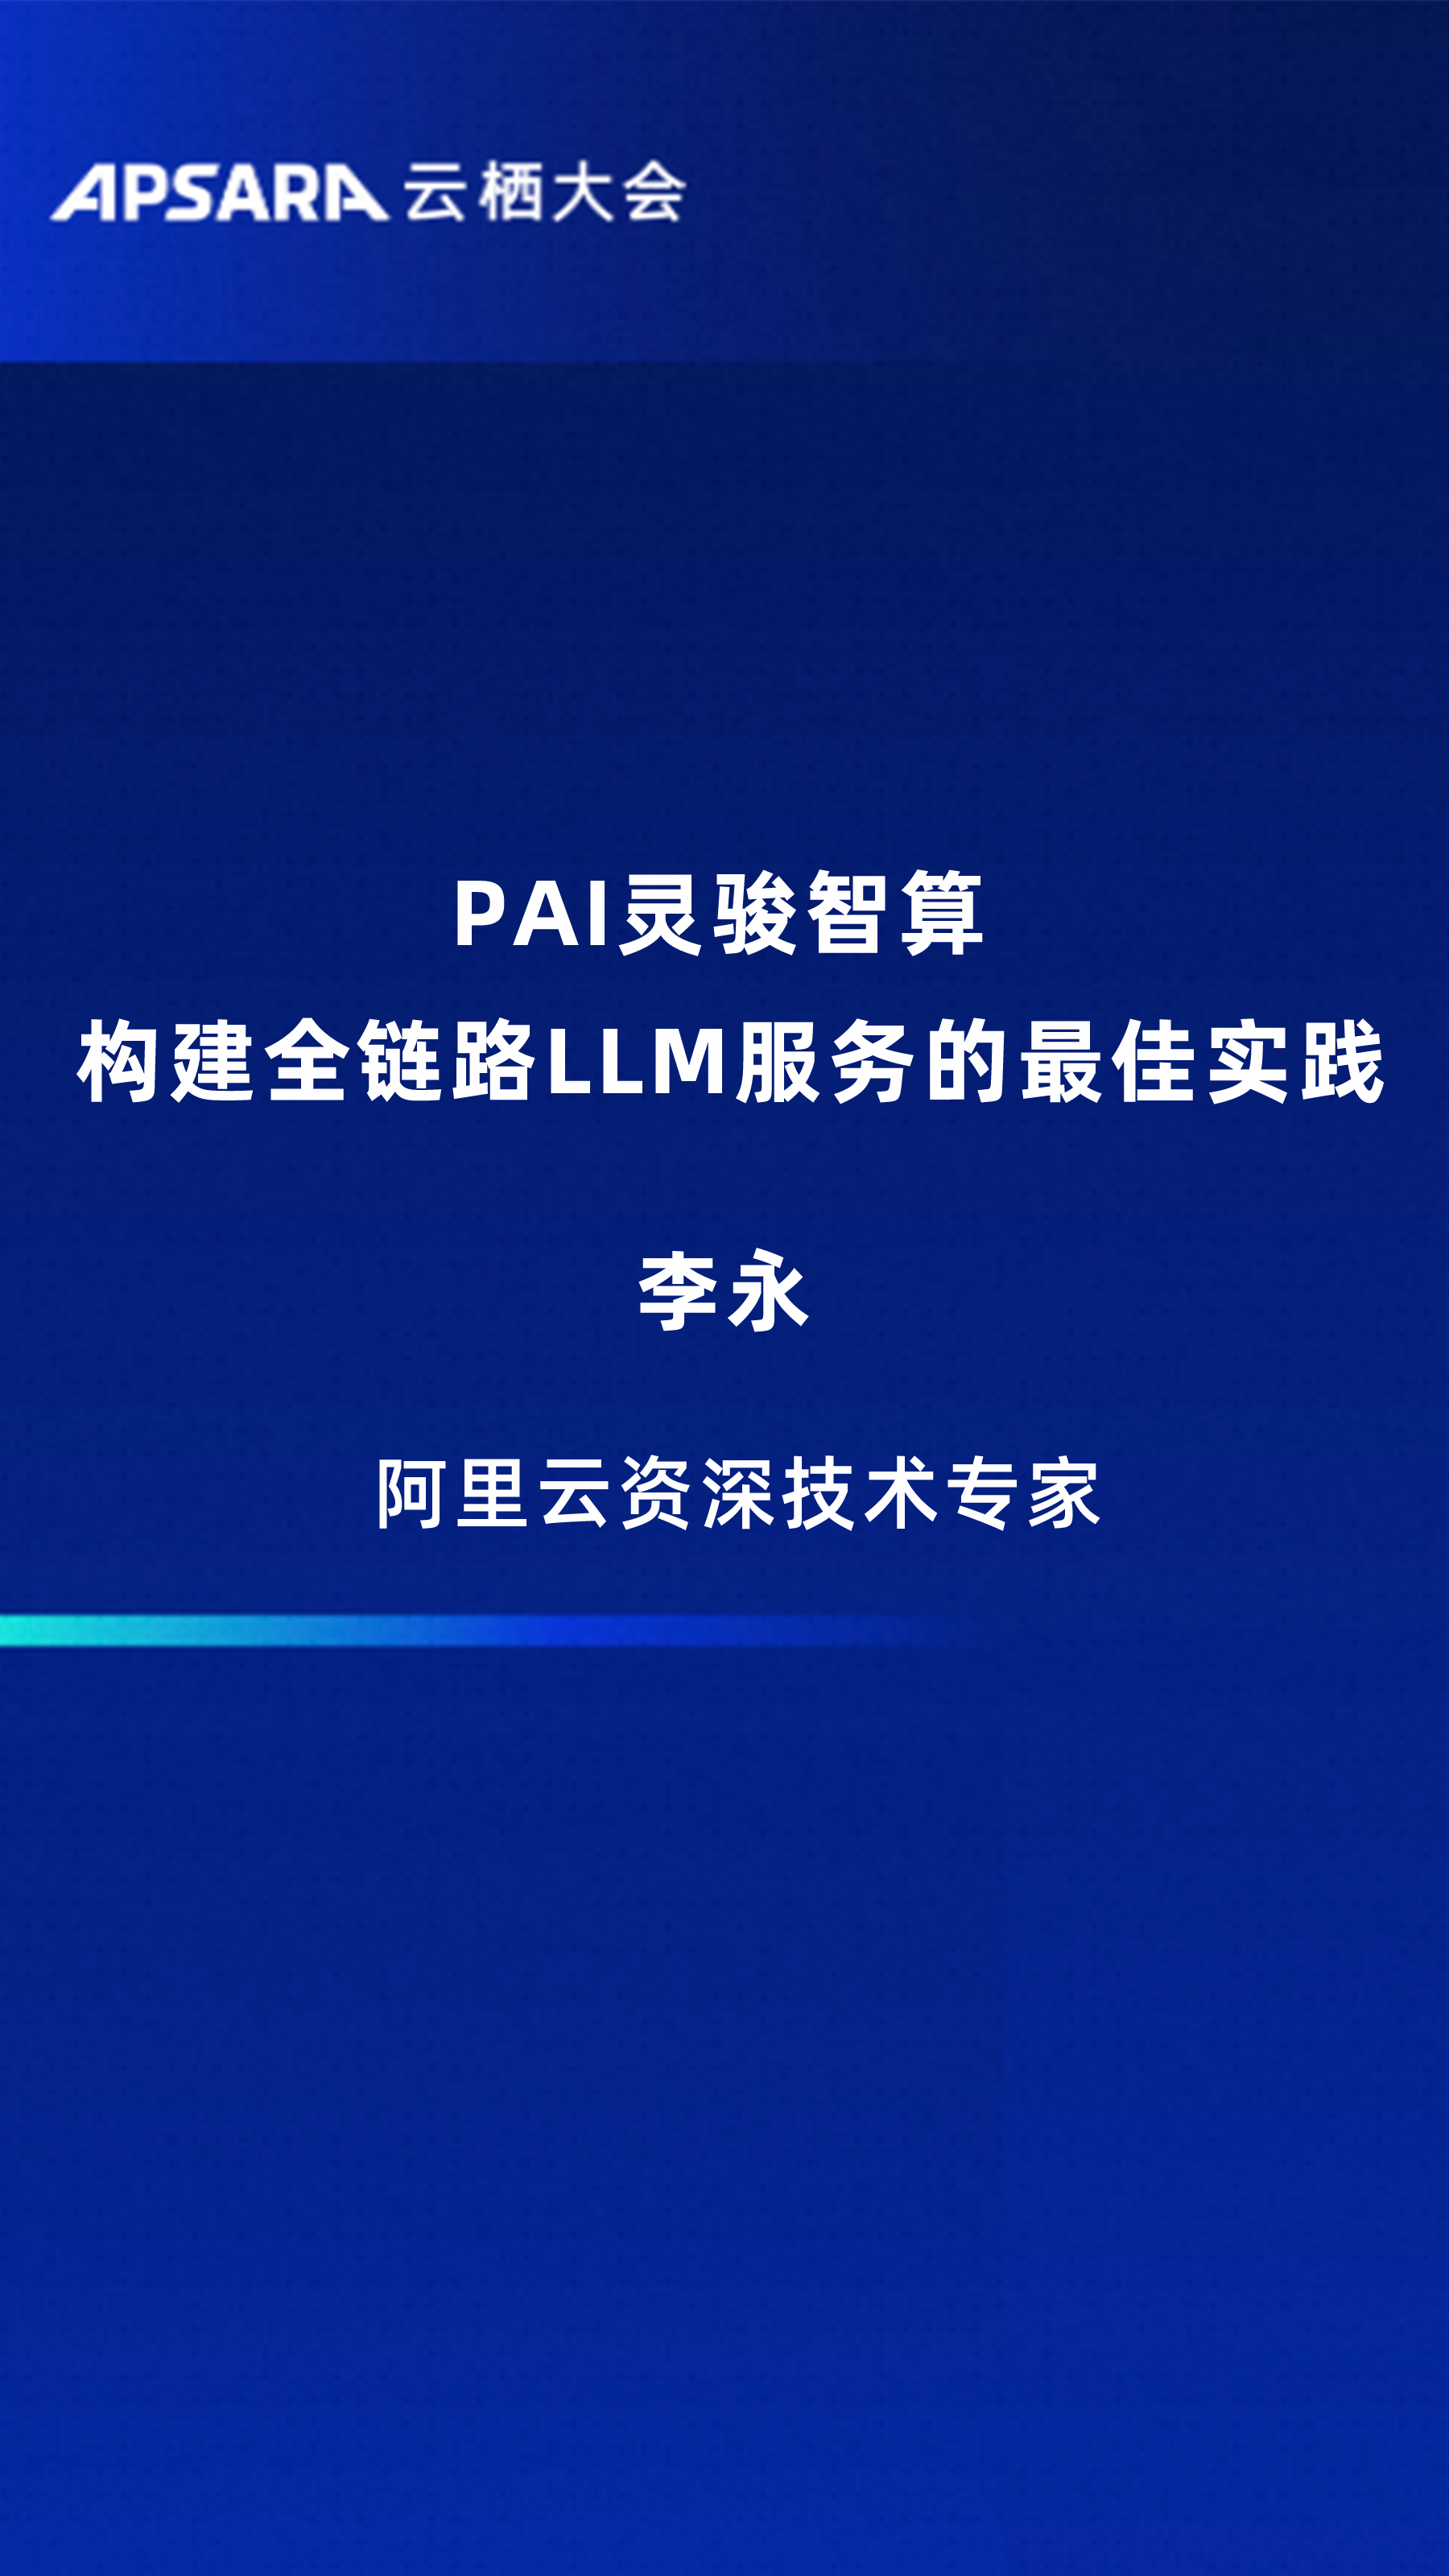 PAI灵骏智算 构建全链路LLM服务的最佳实践